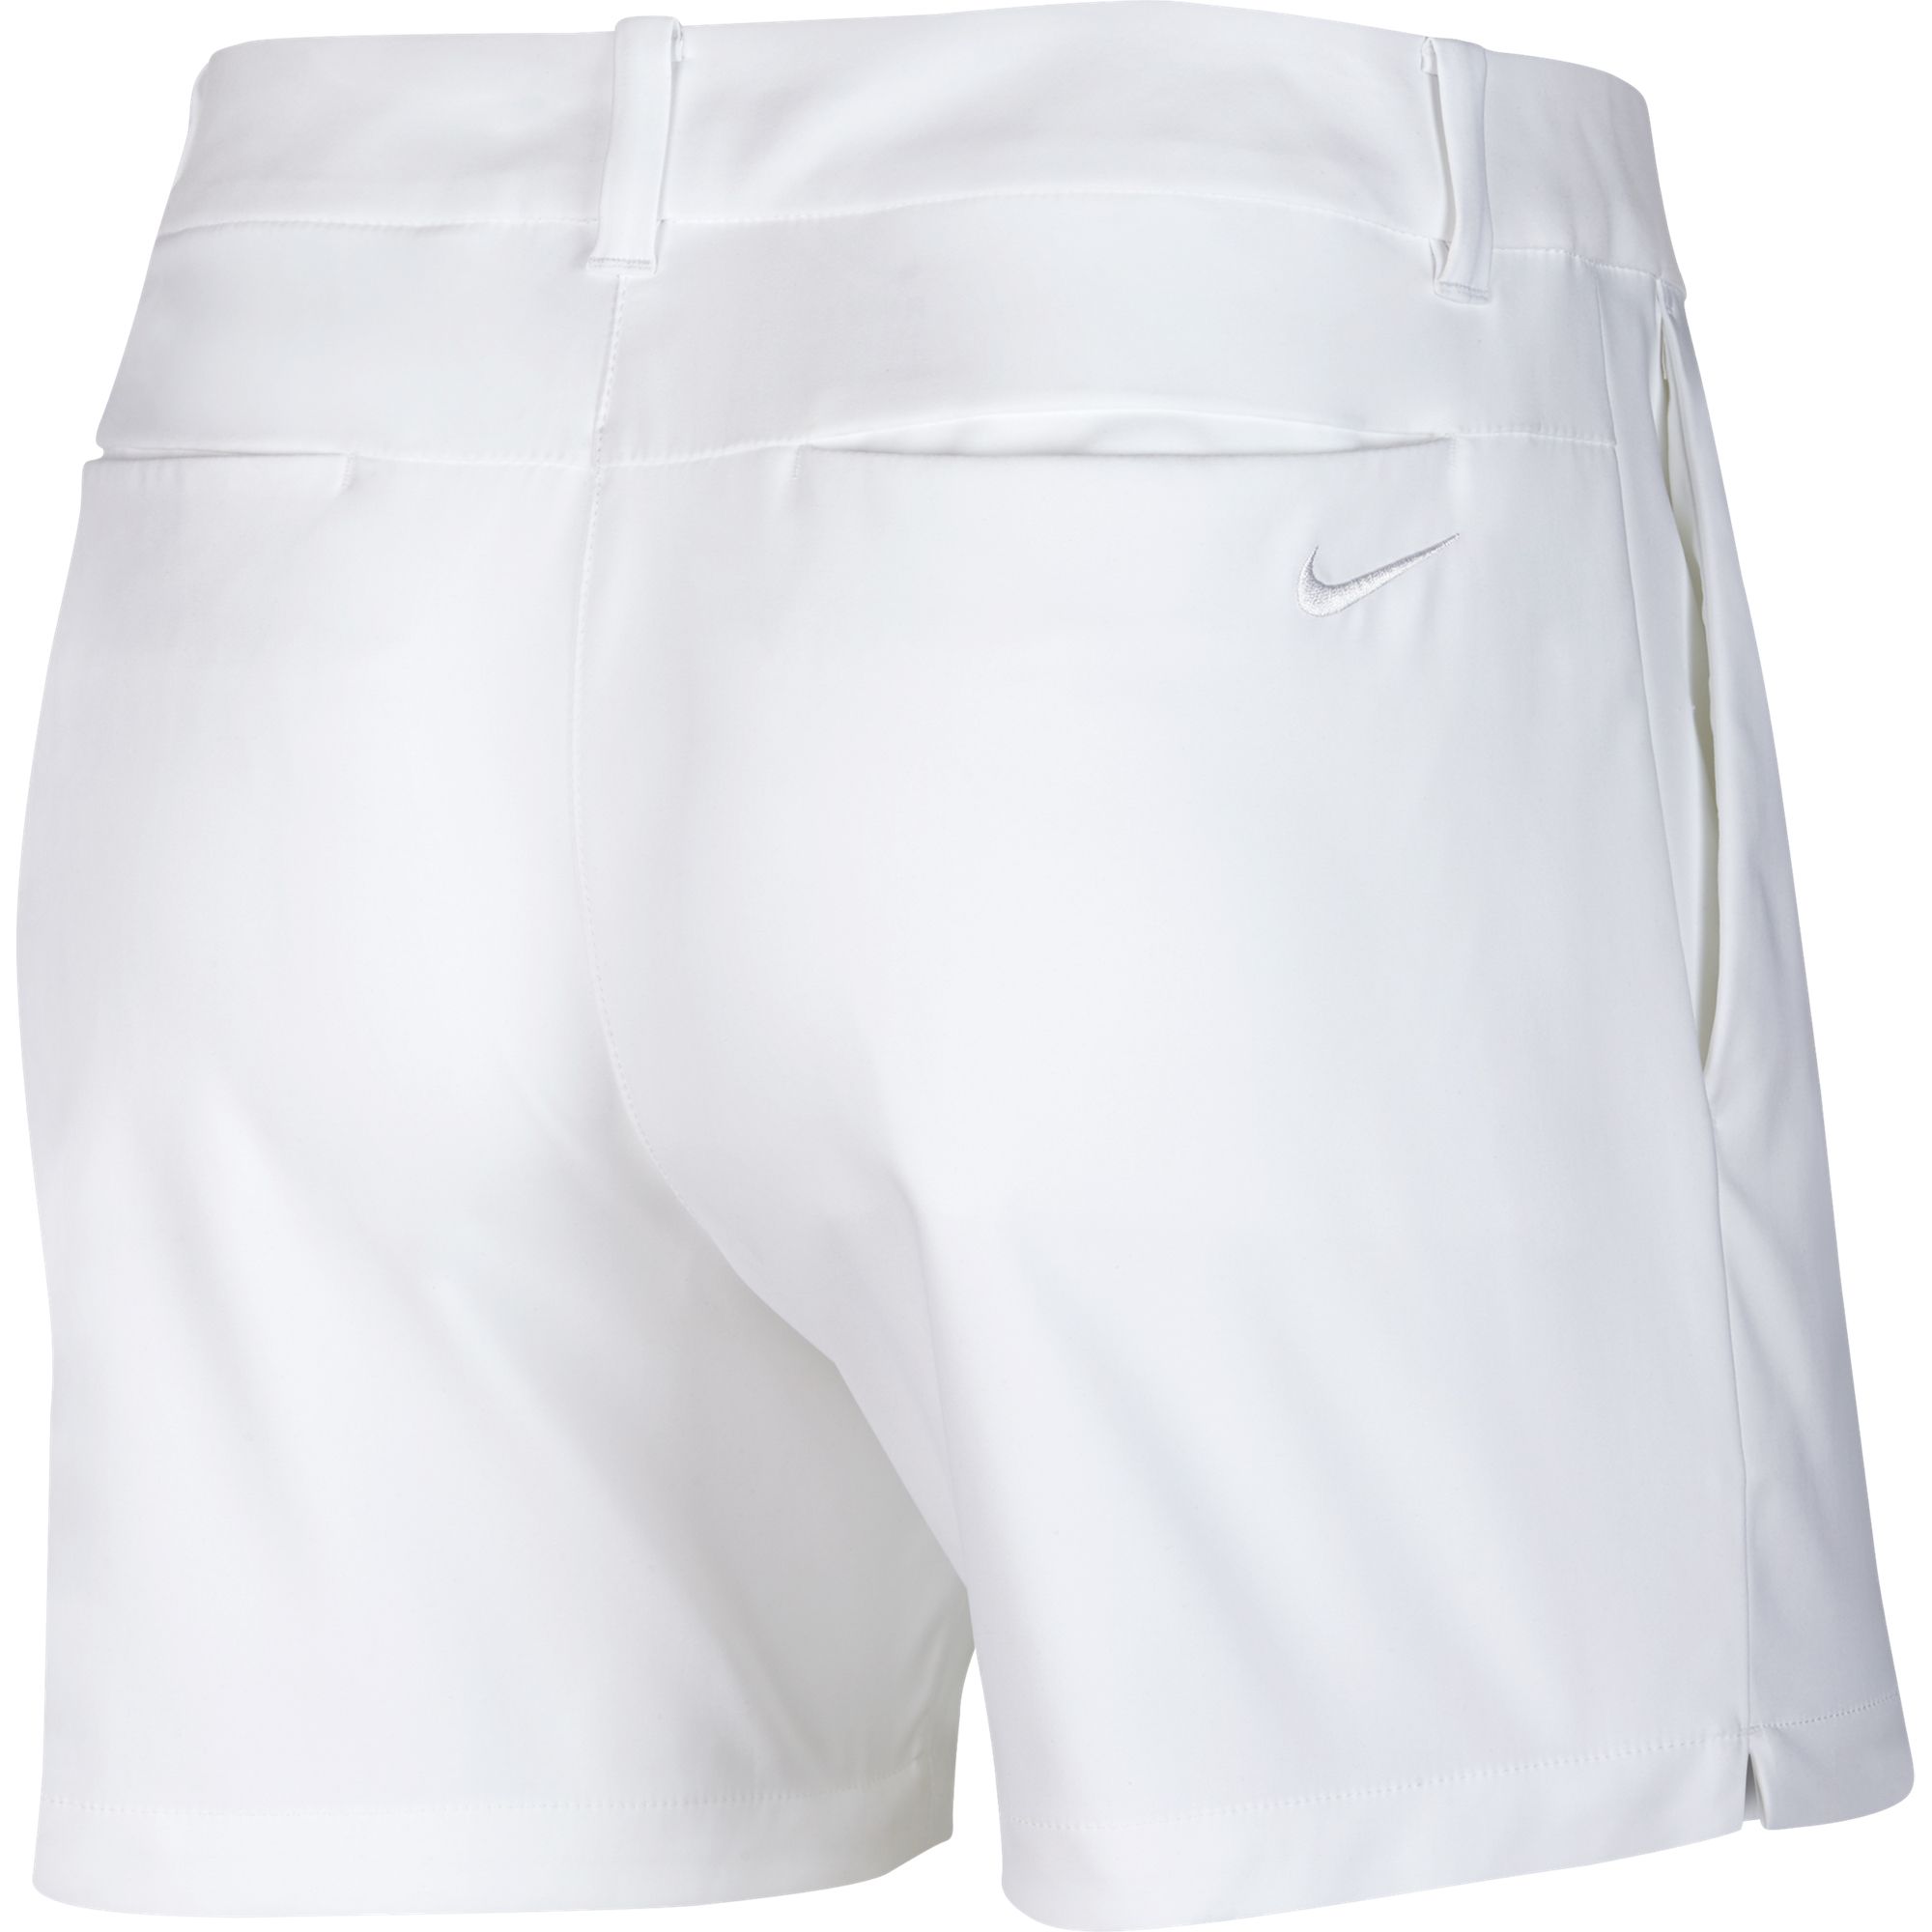 nike womens golf shorts 4.5